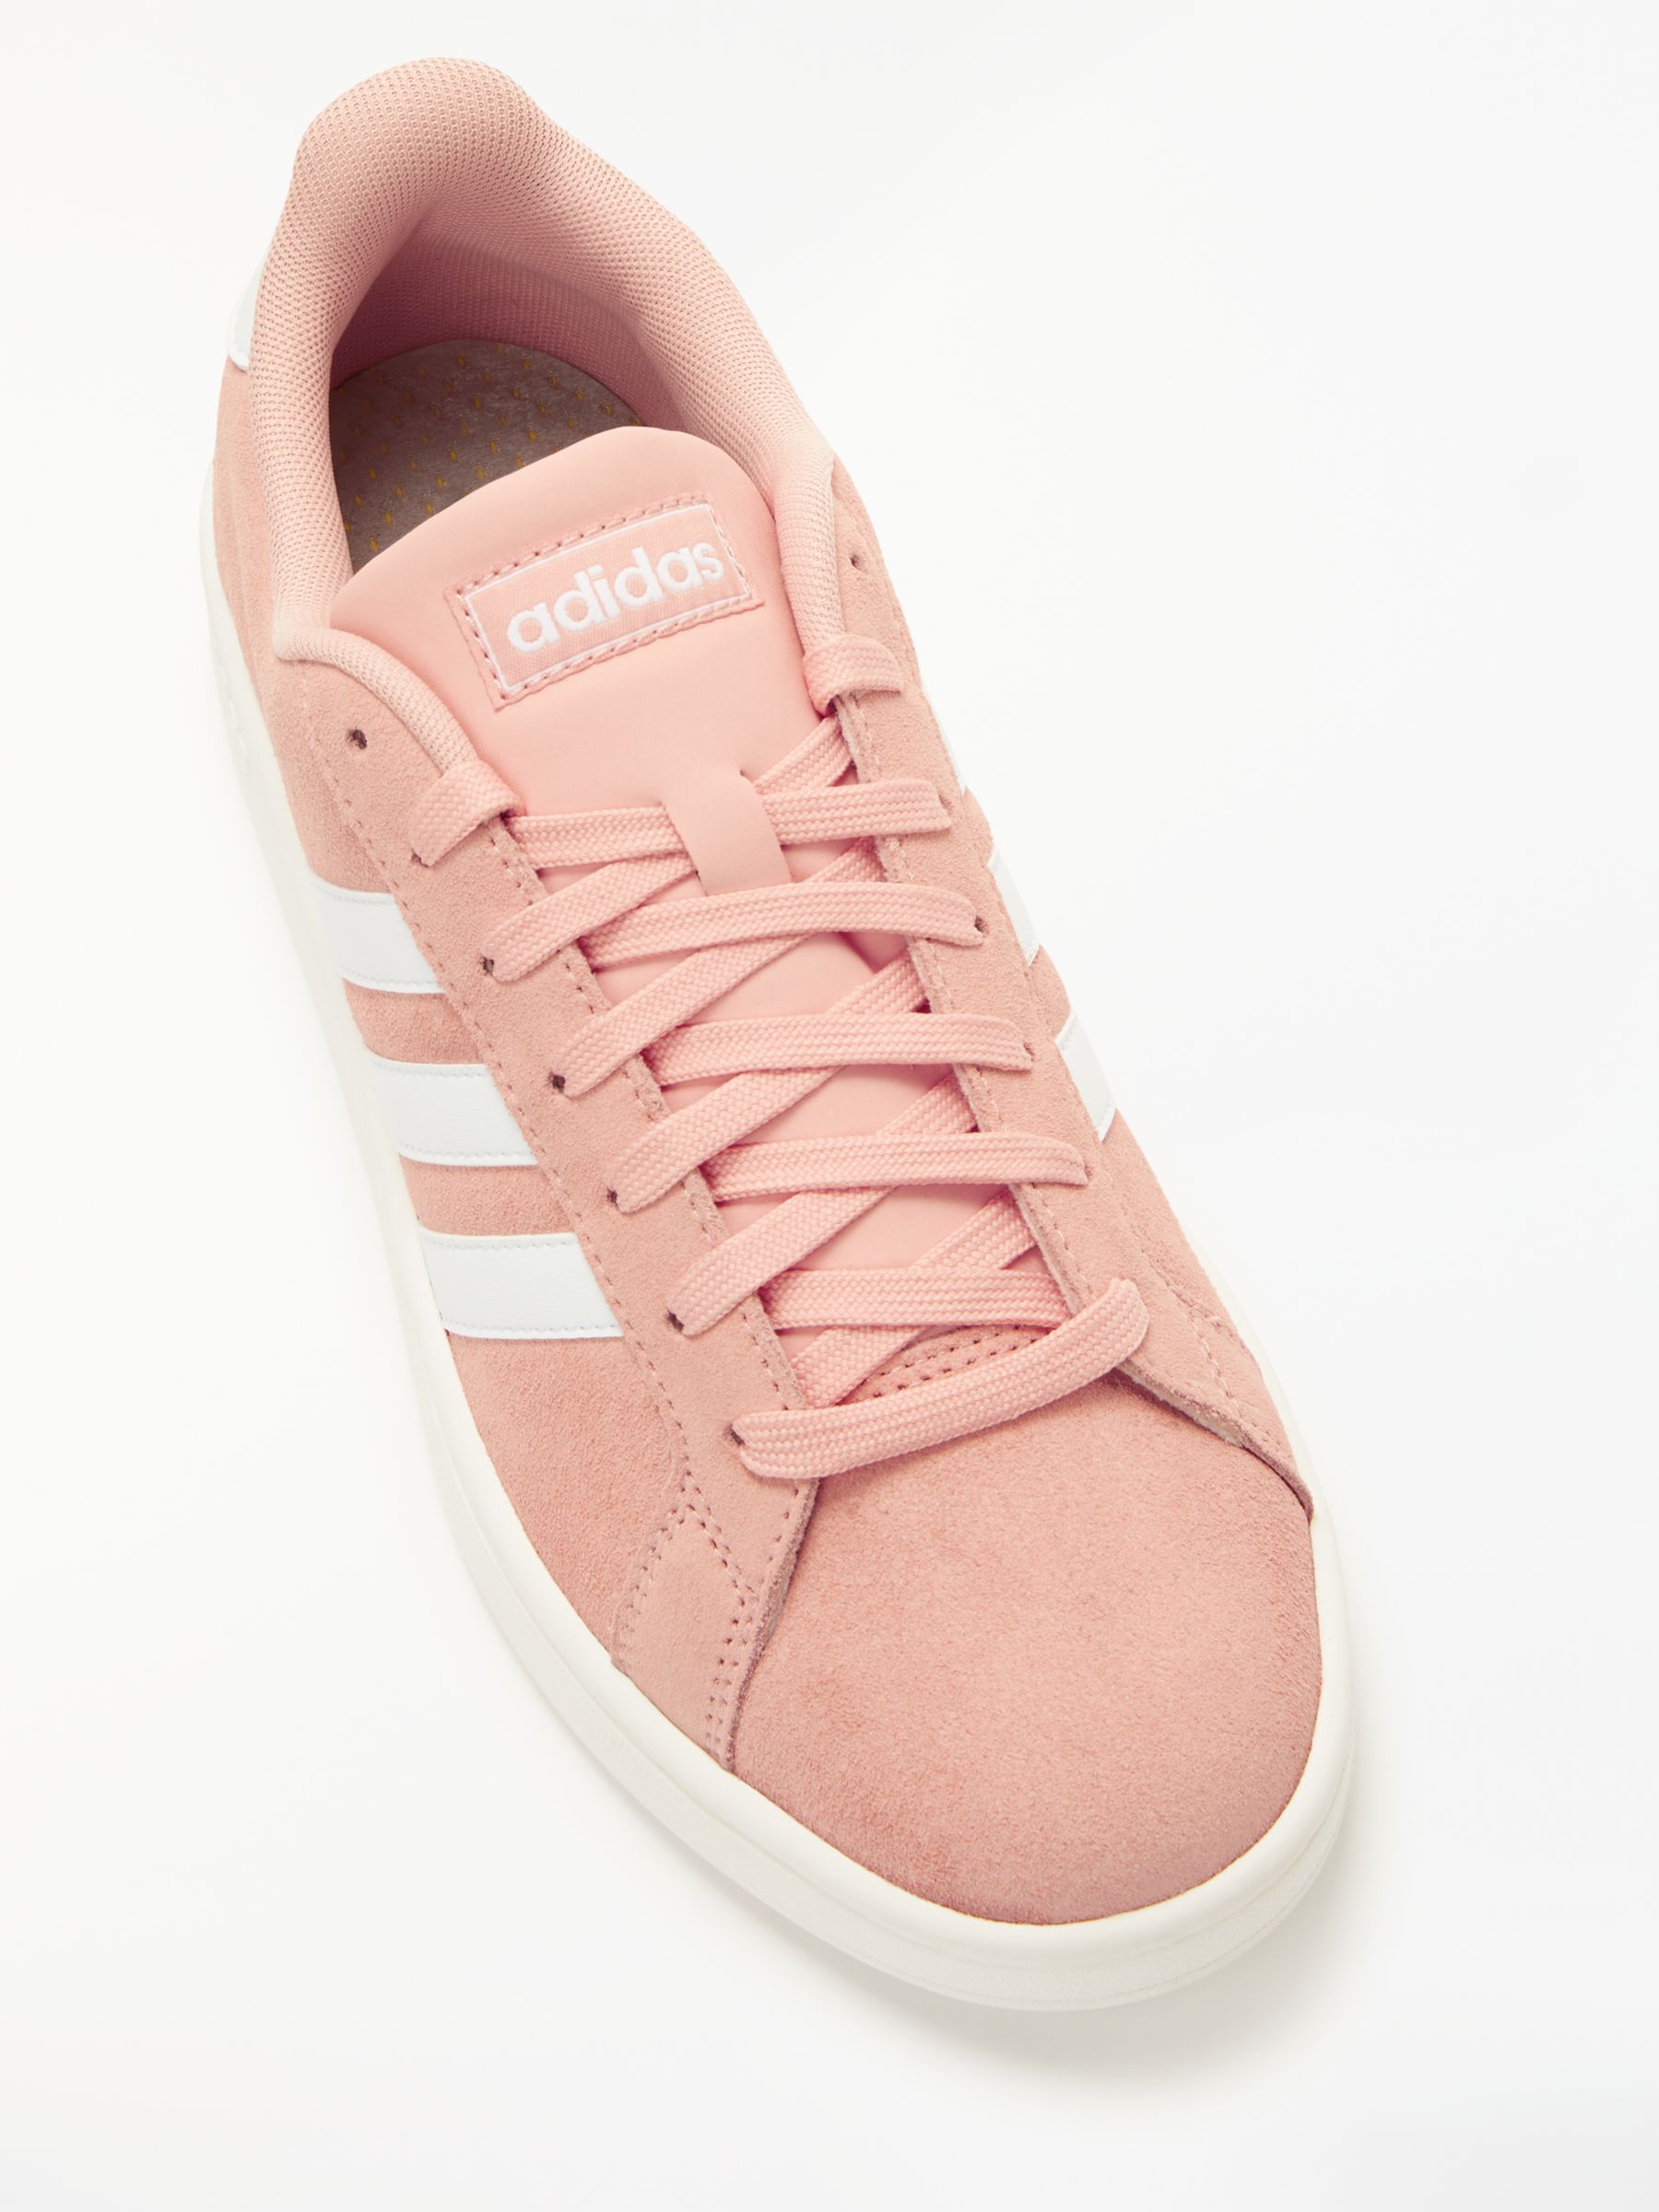 adidas grand court sneaker pink